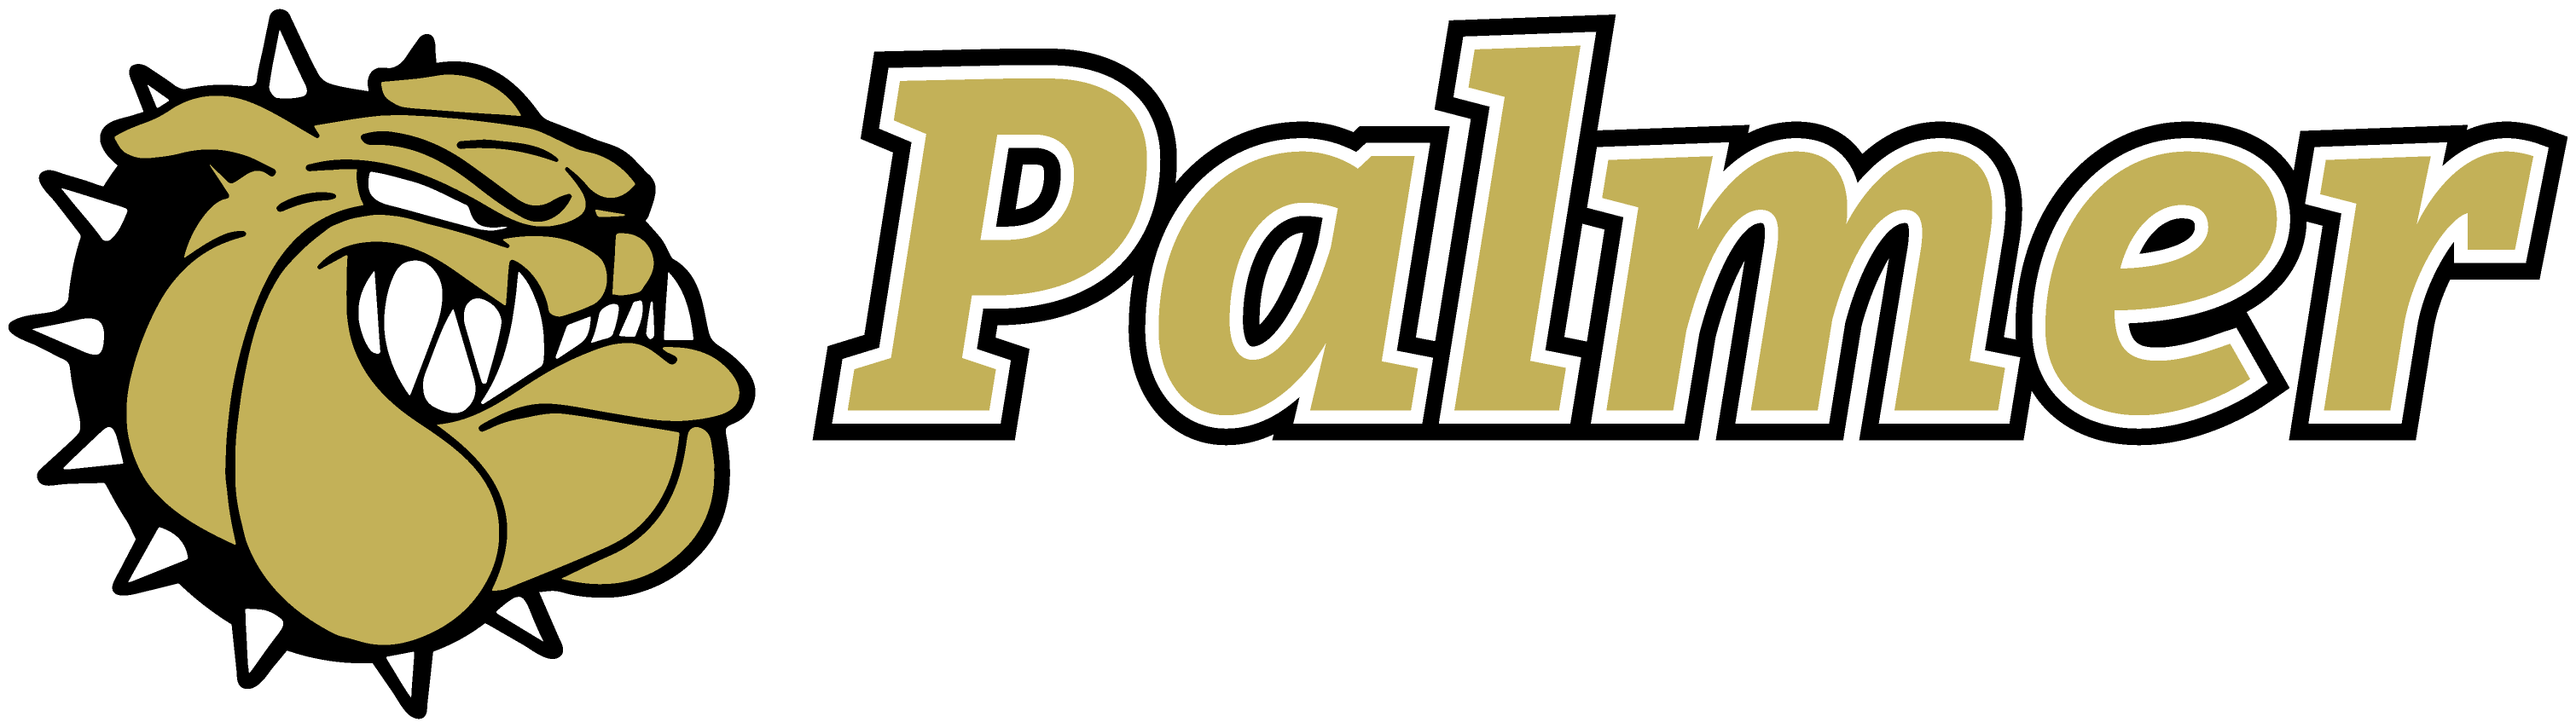 Palmer Logo - Palmer High School / Homepage